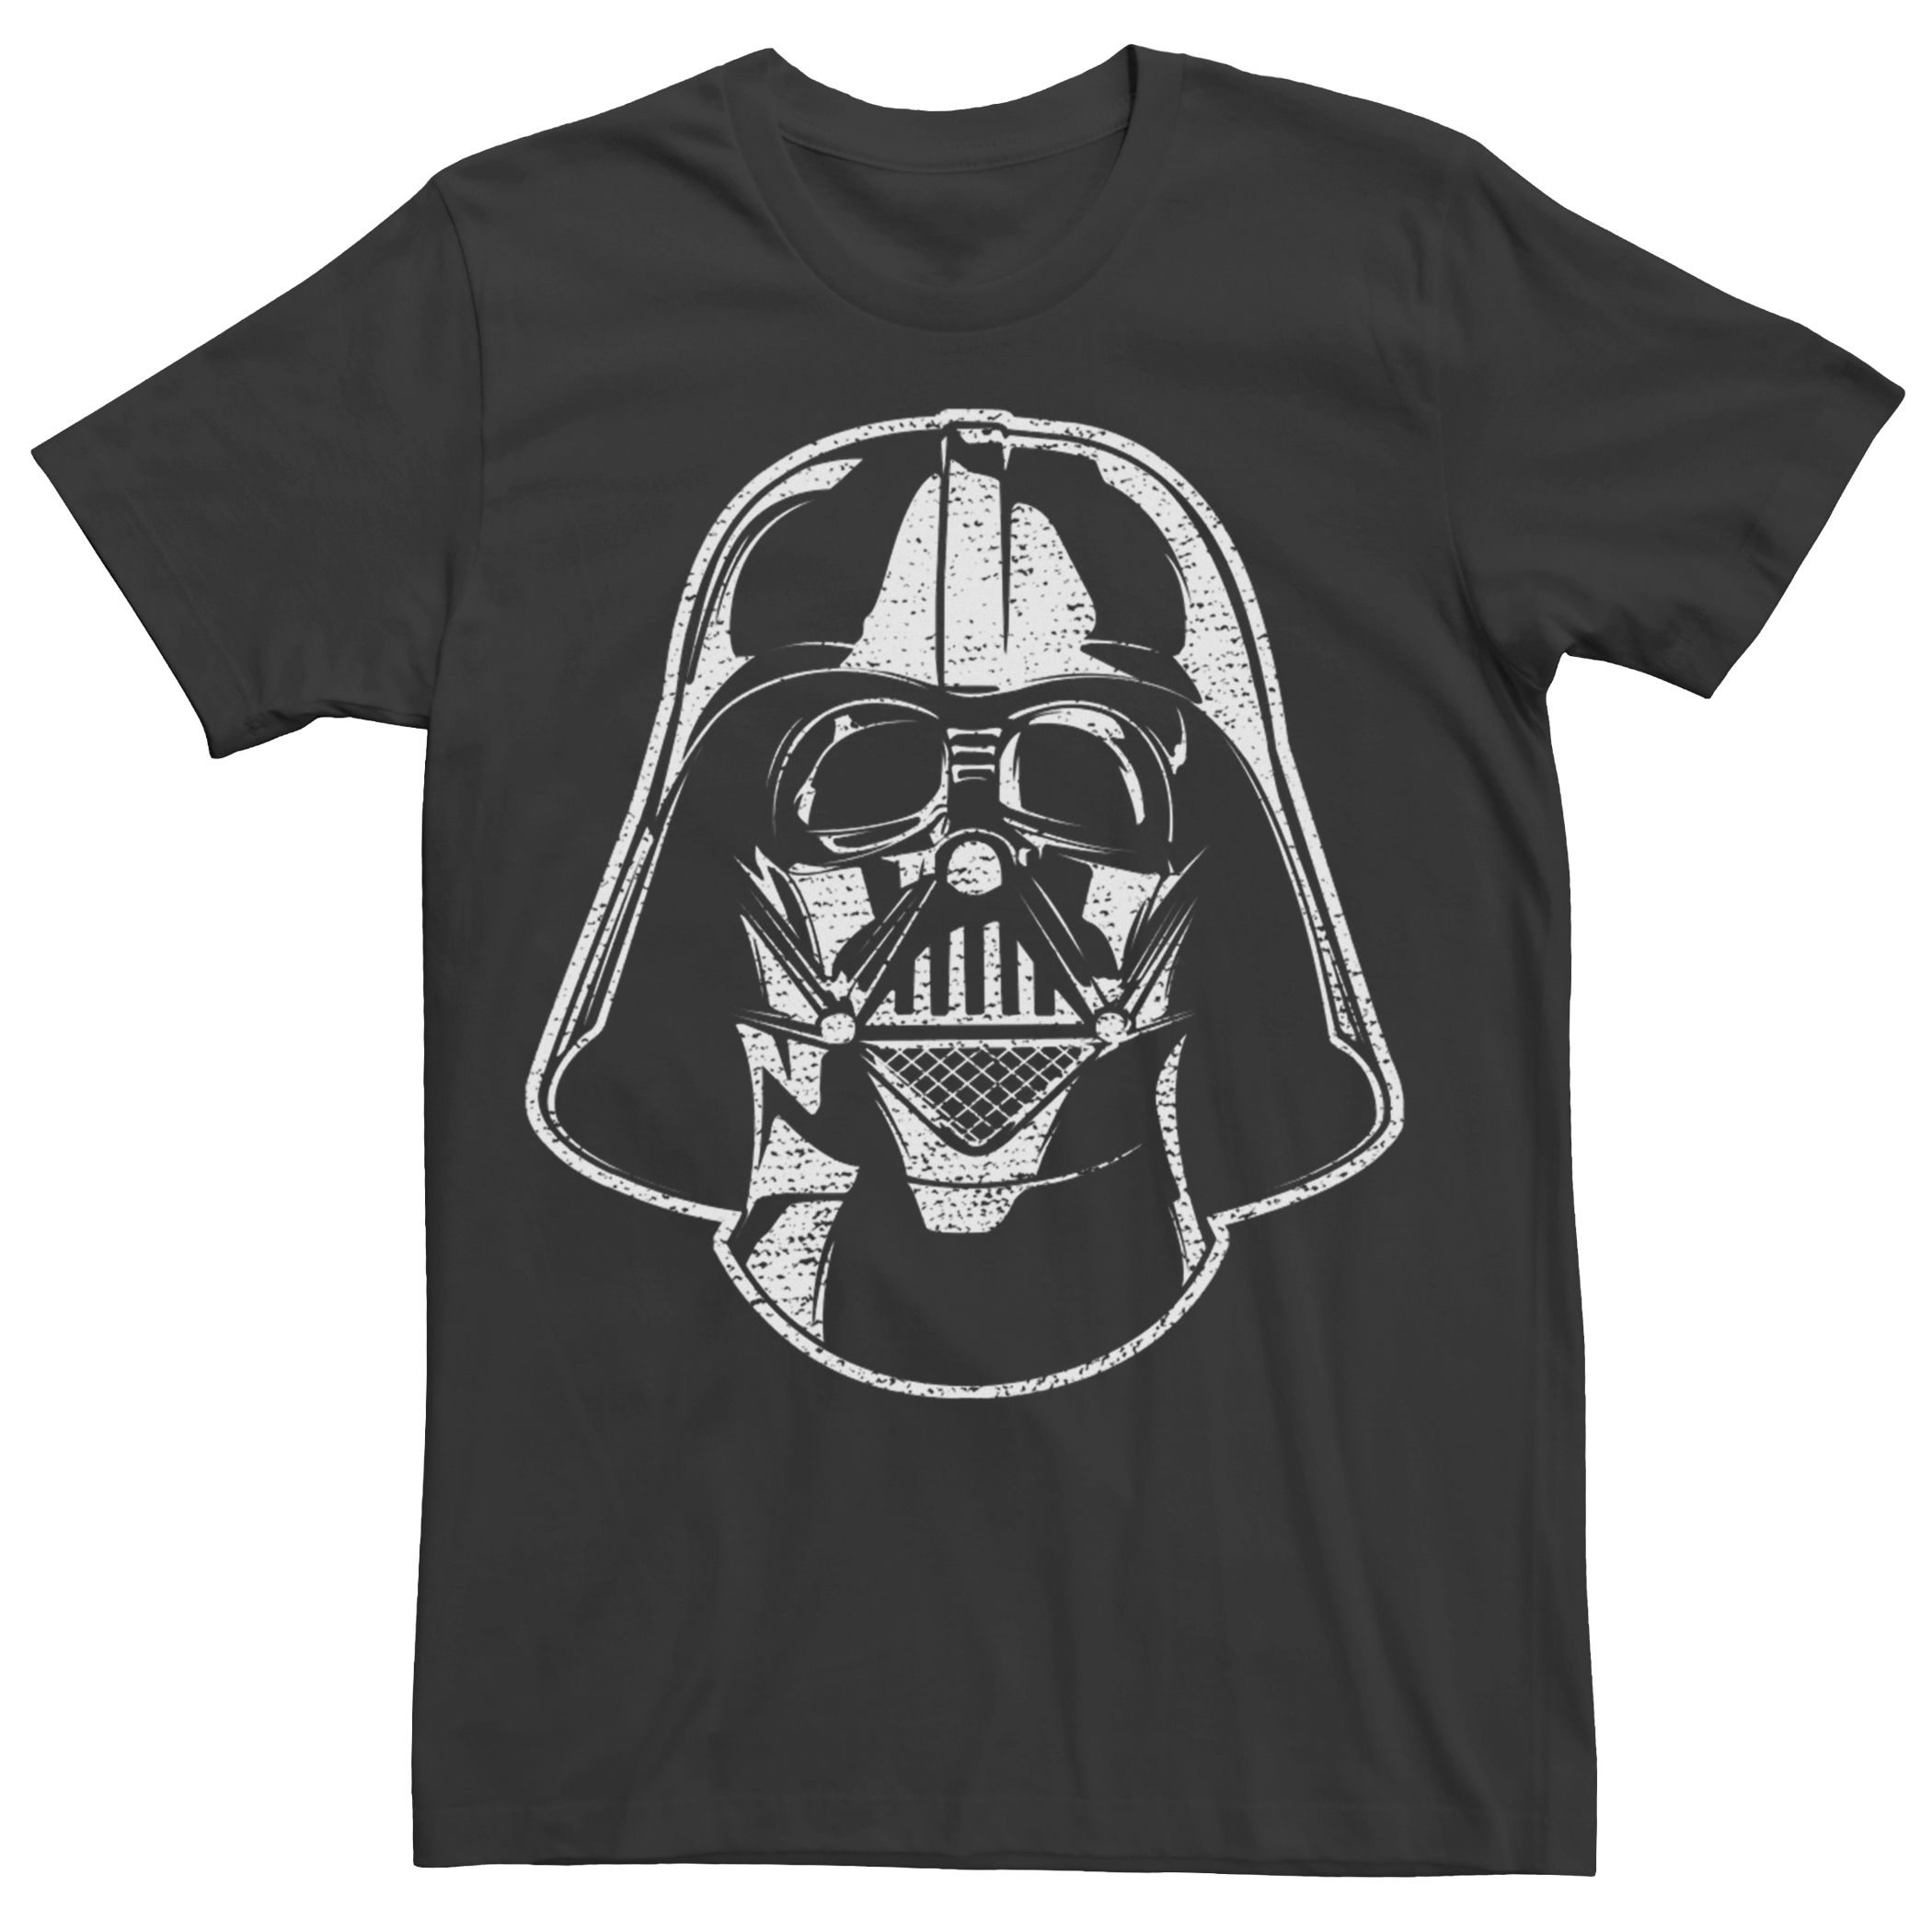 Мужская футболка со шлемом Дарта Вейдера «Звездные войны» Star Wars мужская футболка со звездами и шлемом дарта вейдера звездные войны licensed character